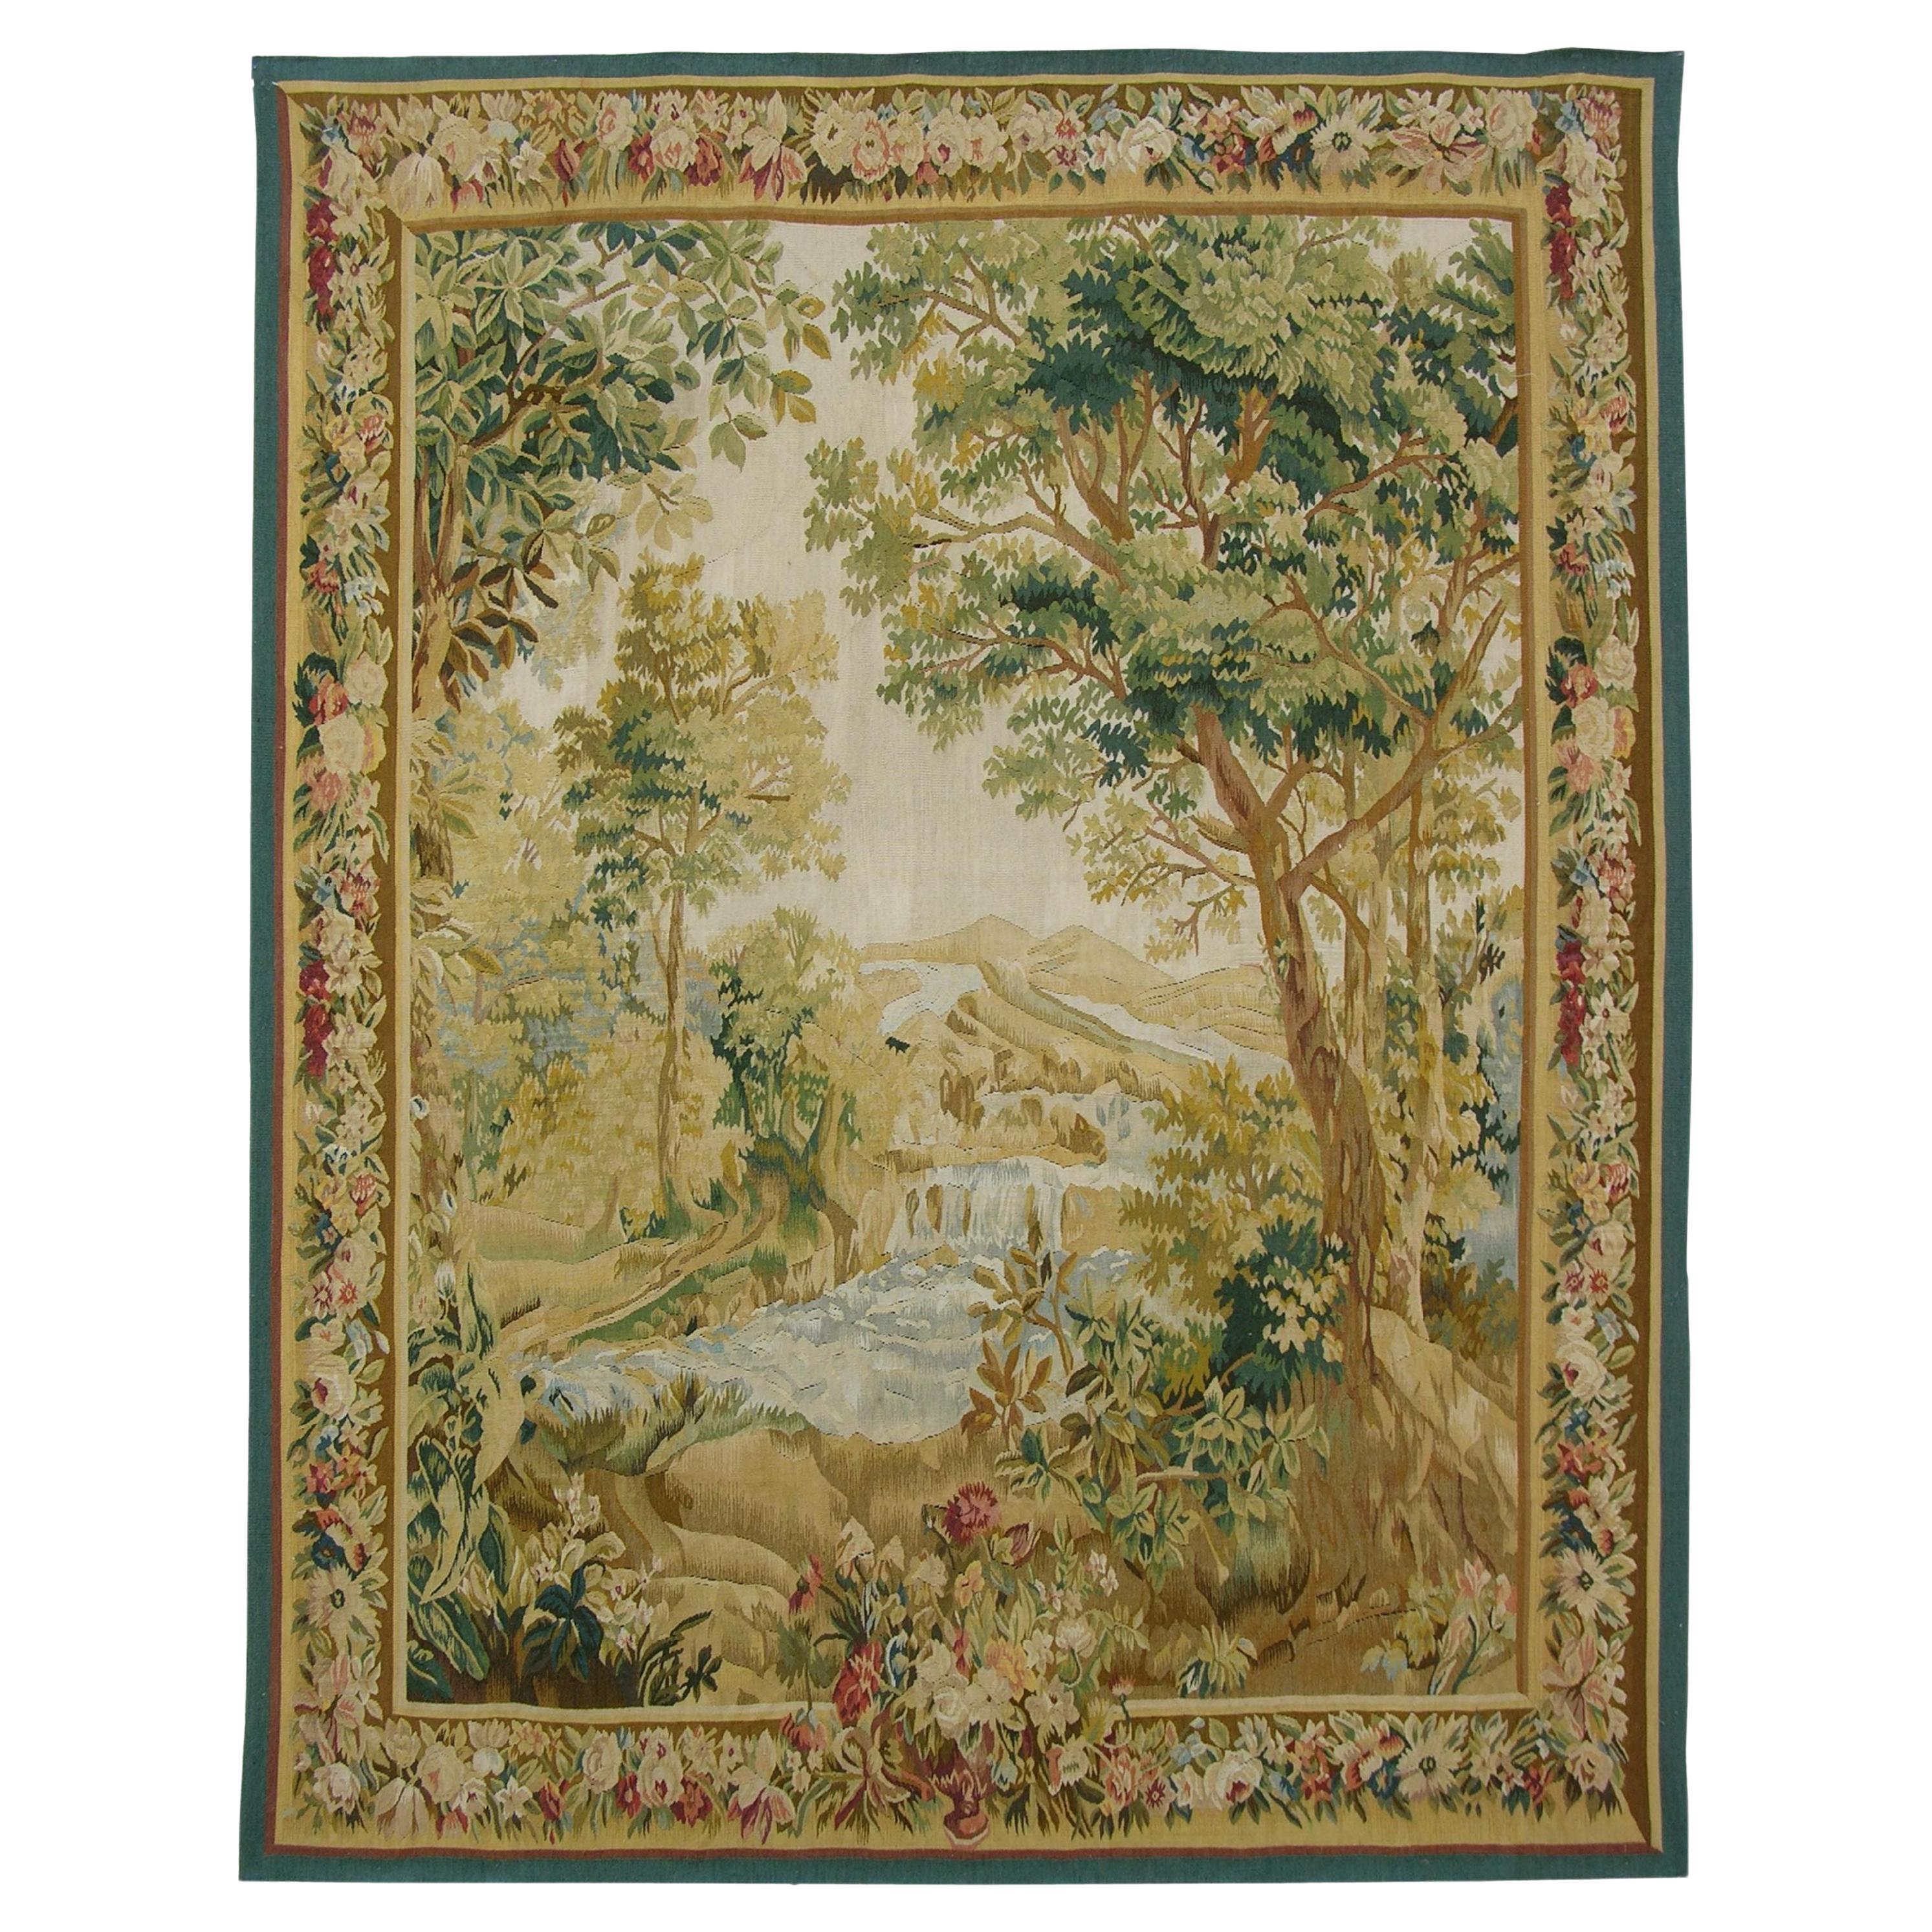 Vintage Tapestry Depicting the Garden of Eden 6'2" X 5'